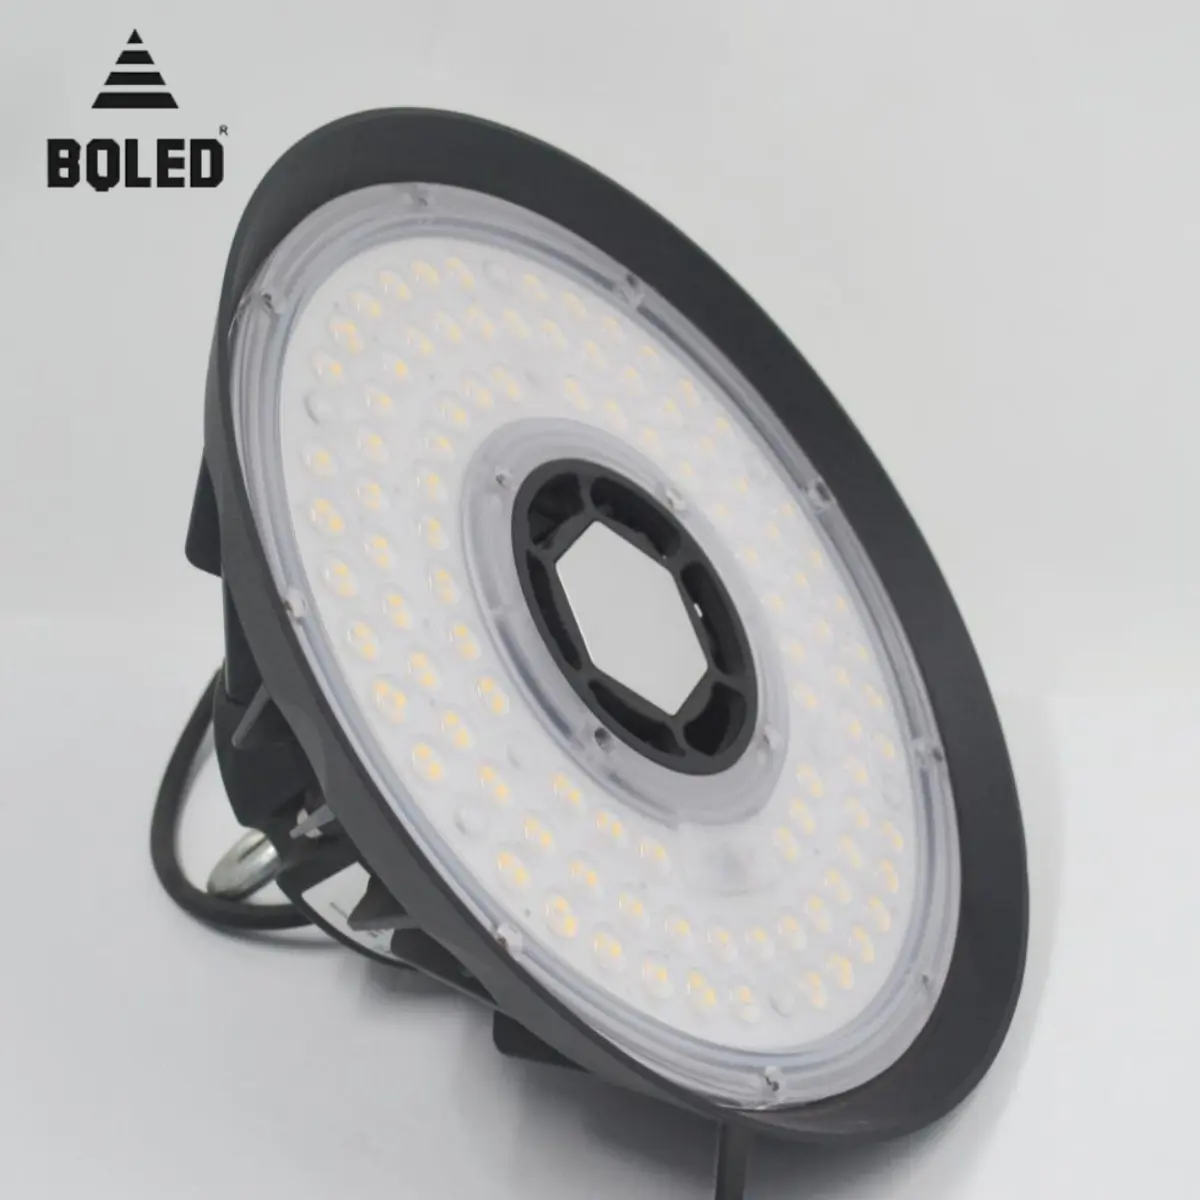 Customizable best quality LED lamp Fixtures waterproof IP65 high bay light 100W 150W 200W led highbay lamps UFO LED light 400W